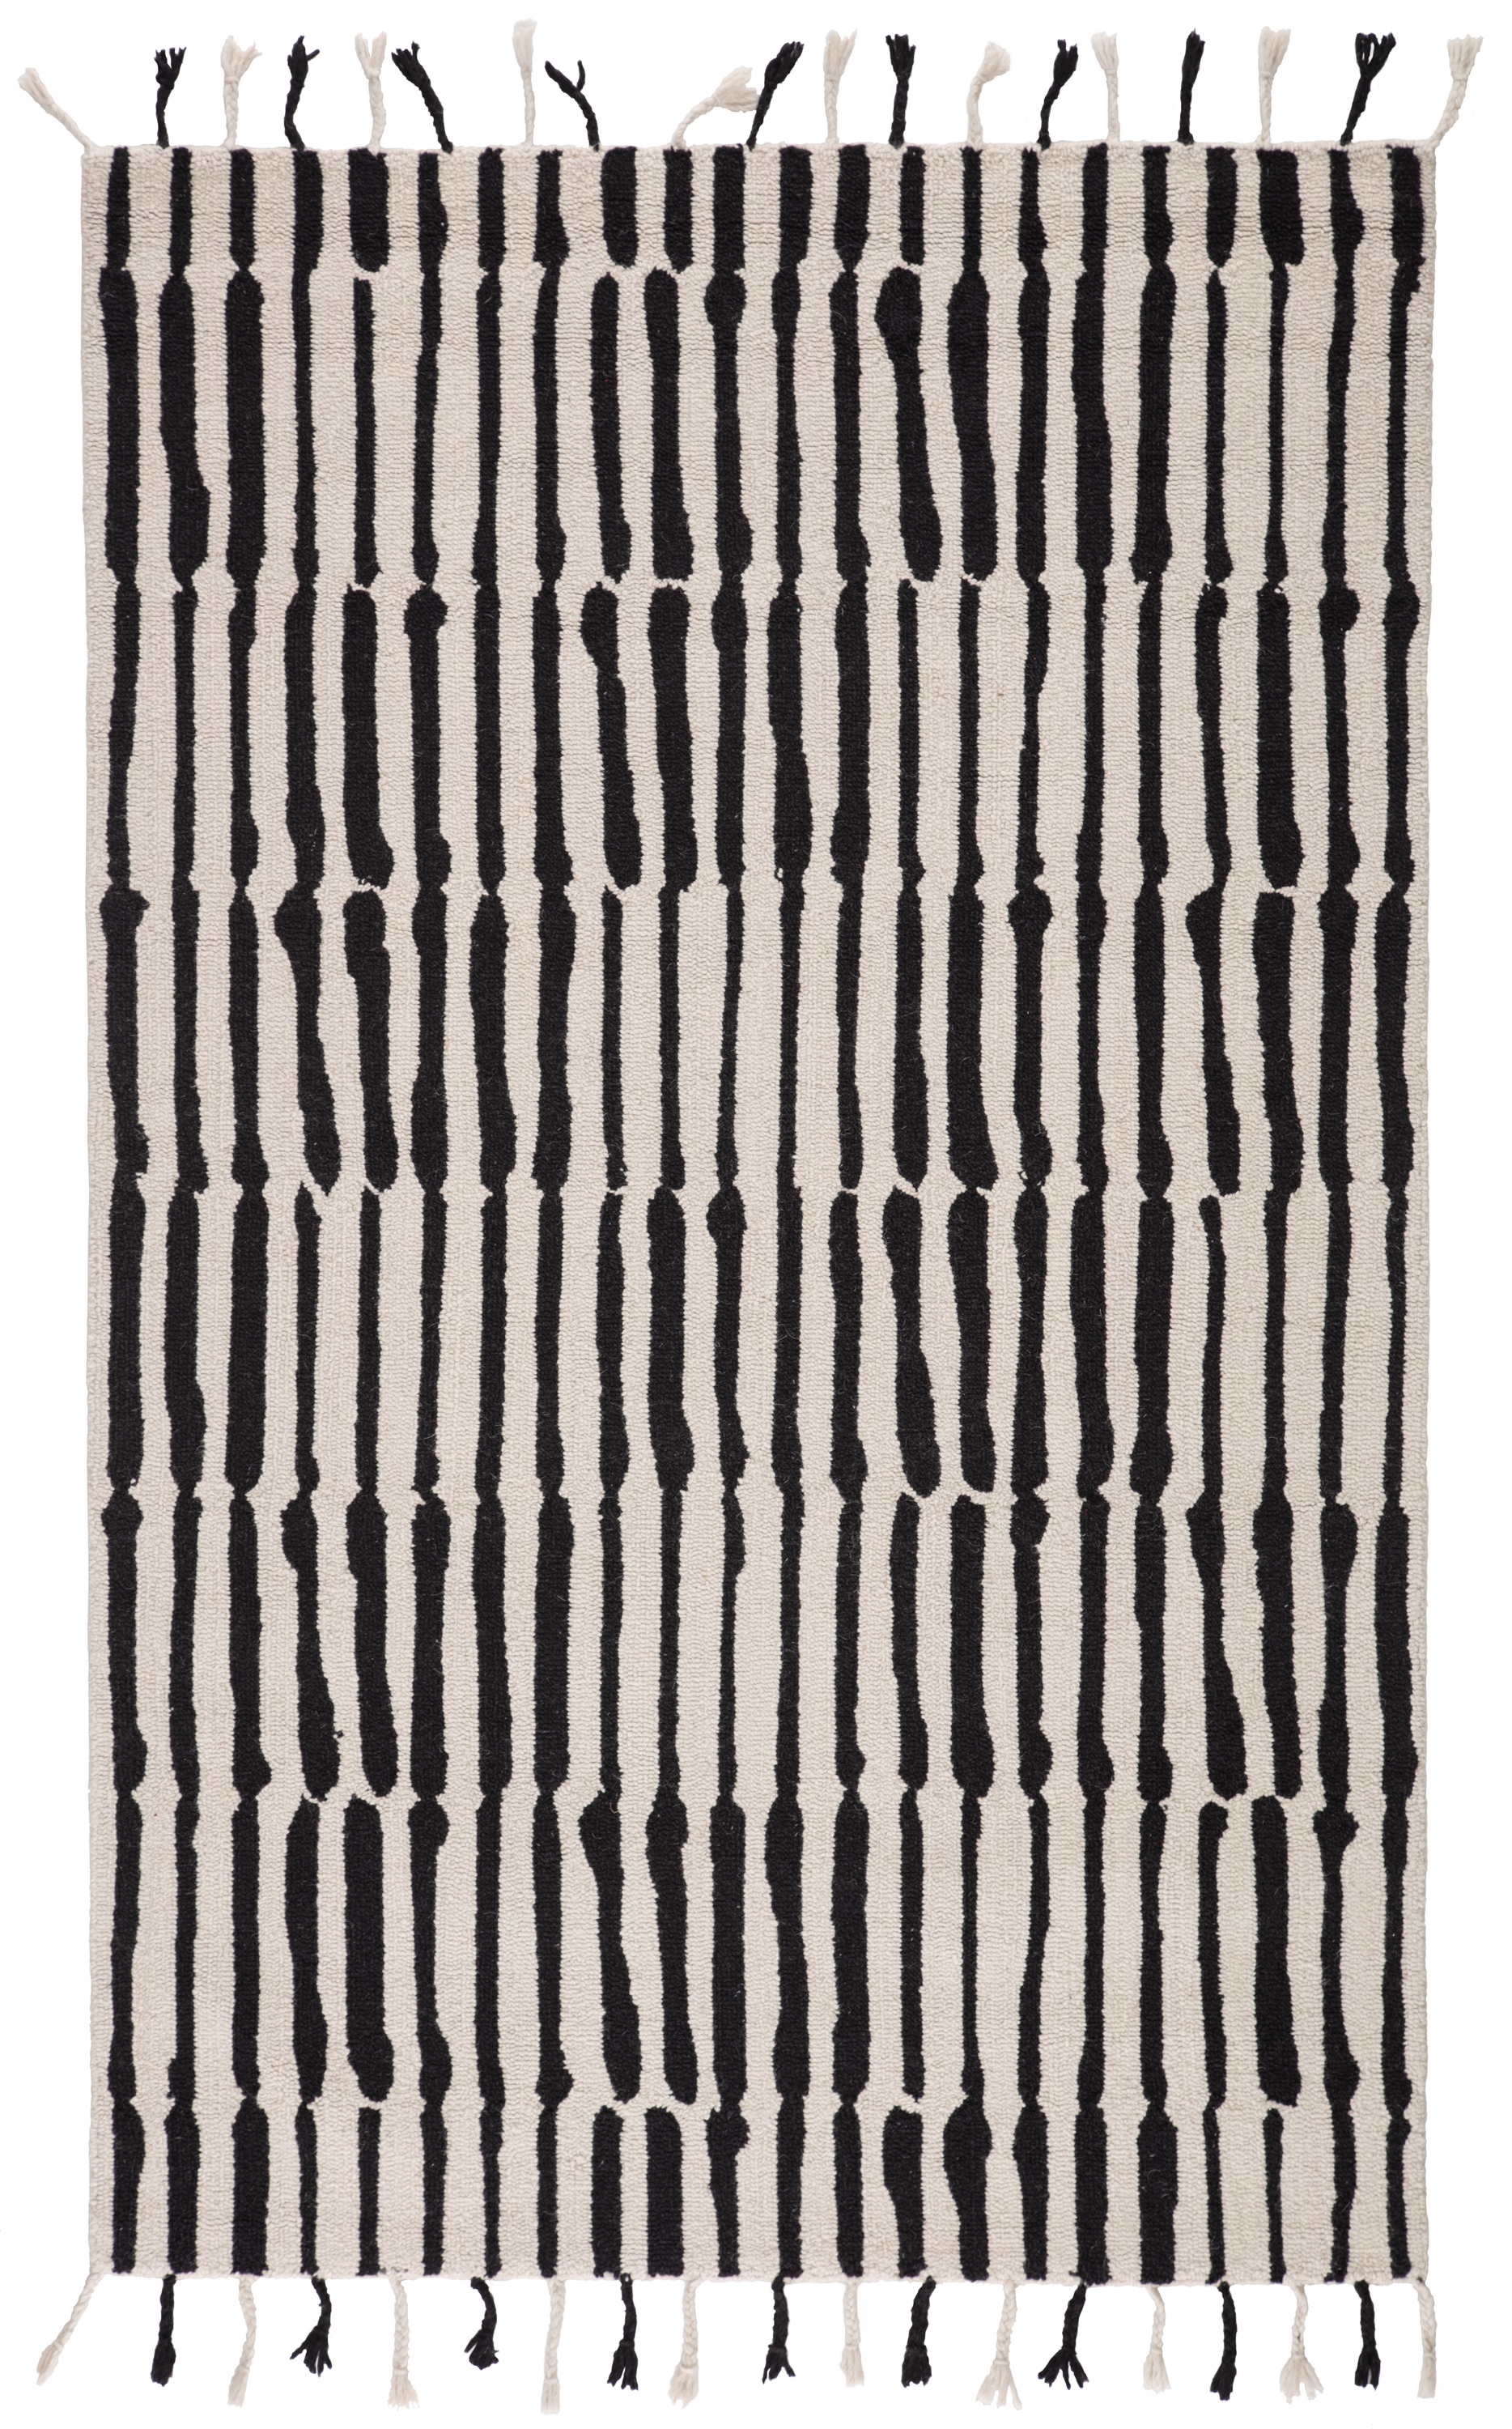 Tiana Rug, 5'x8', Black - Image 0